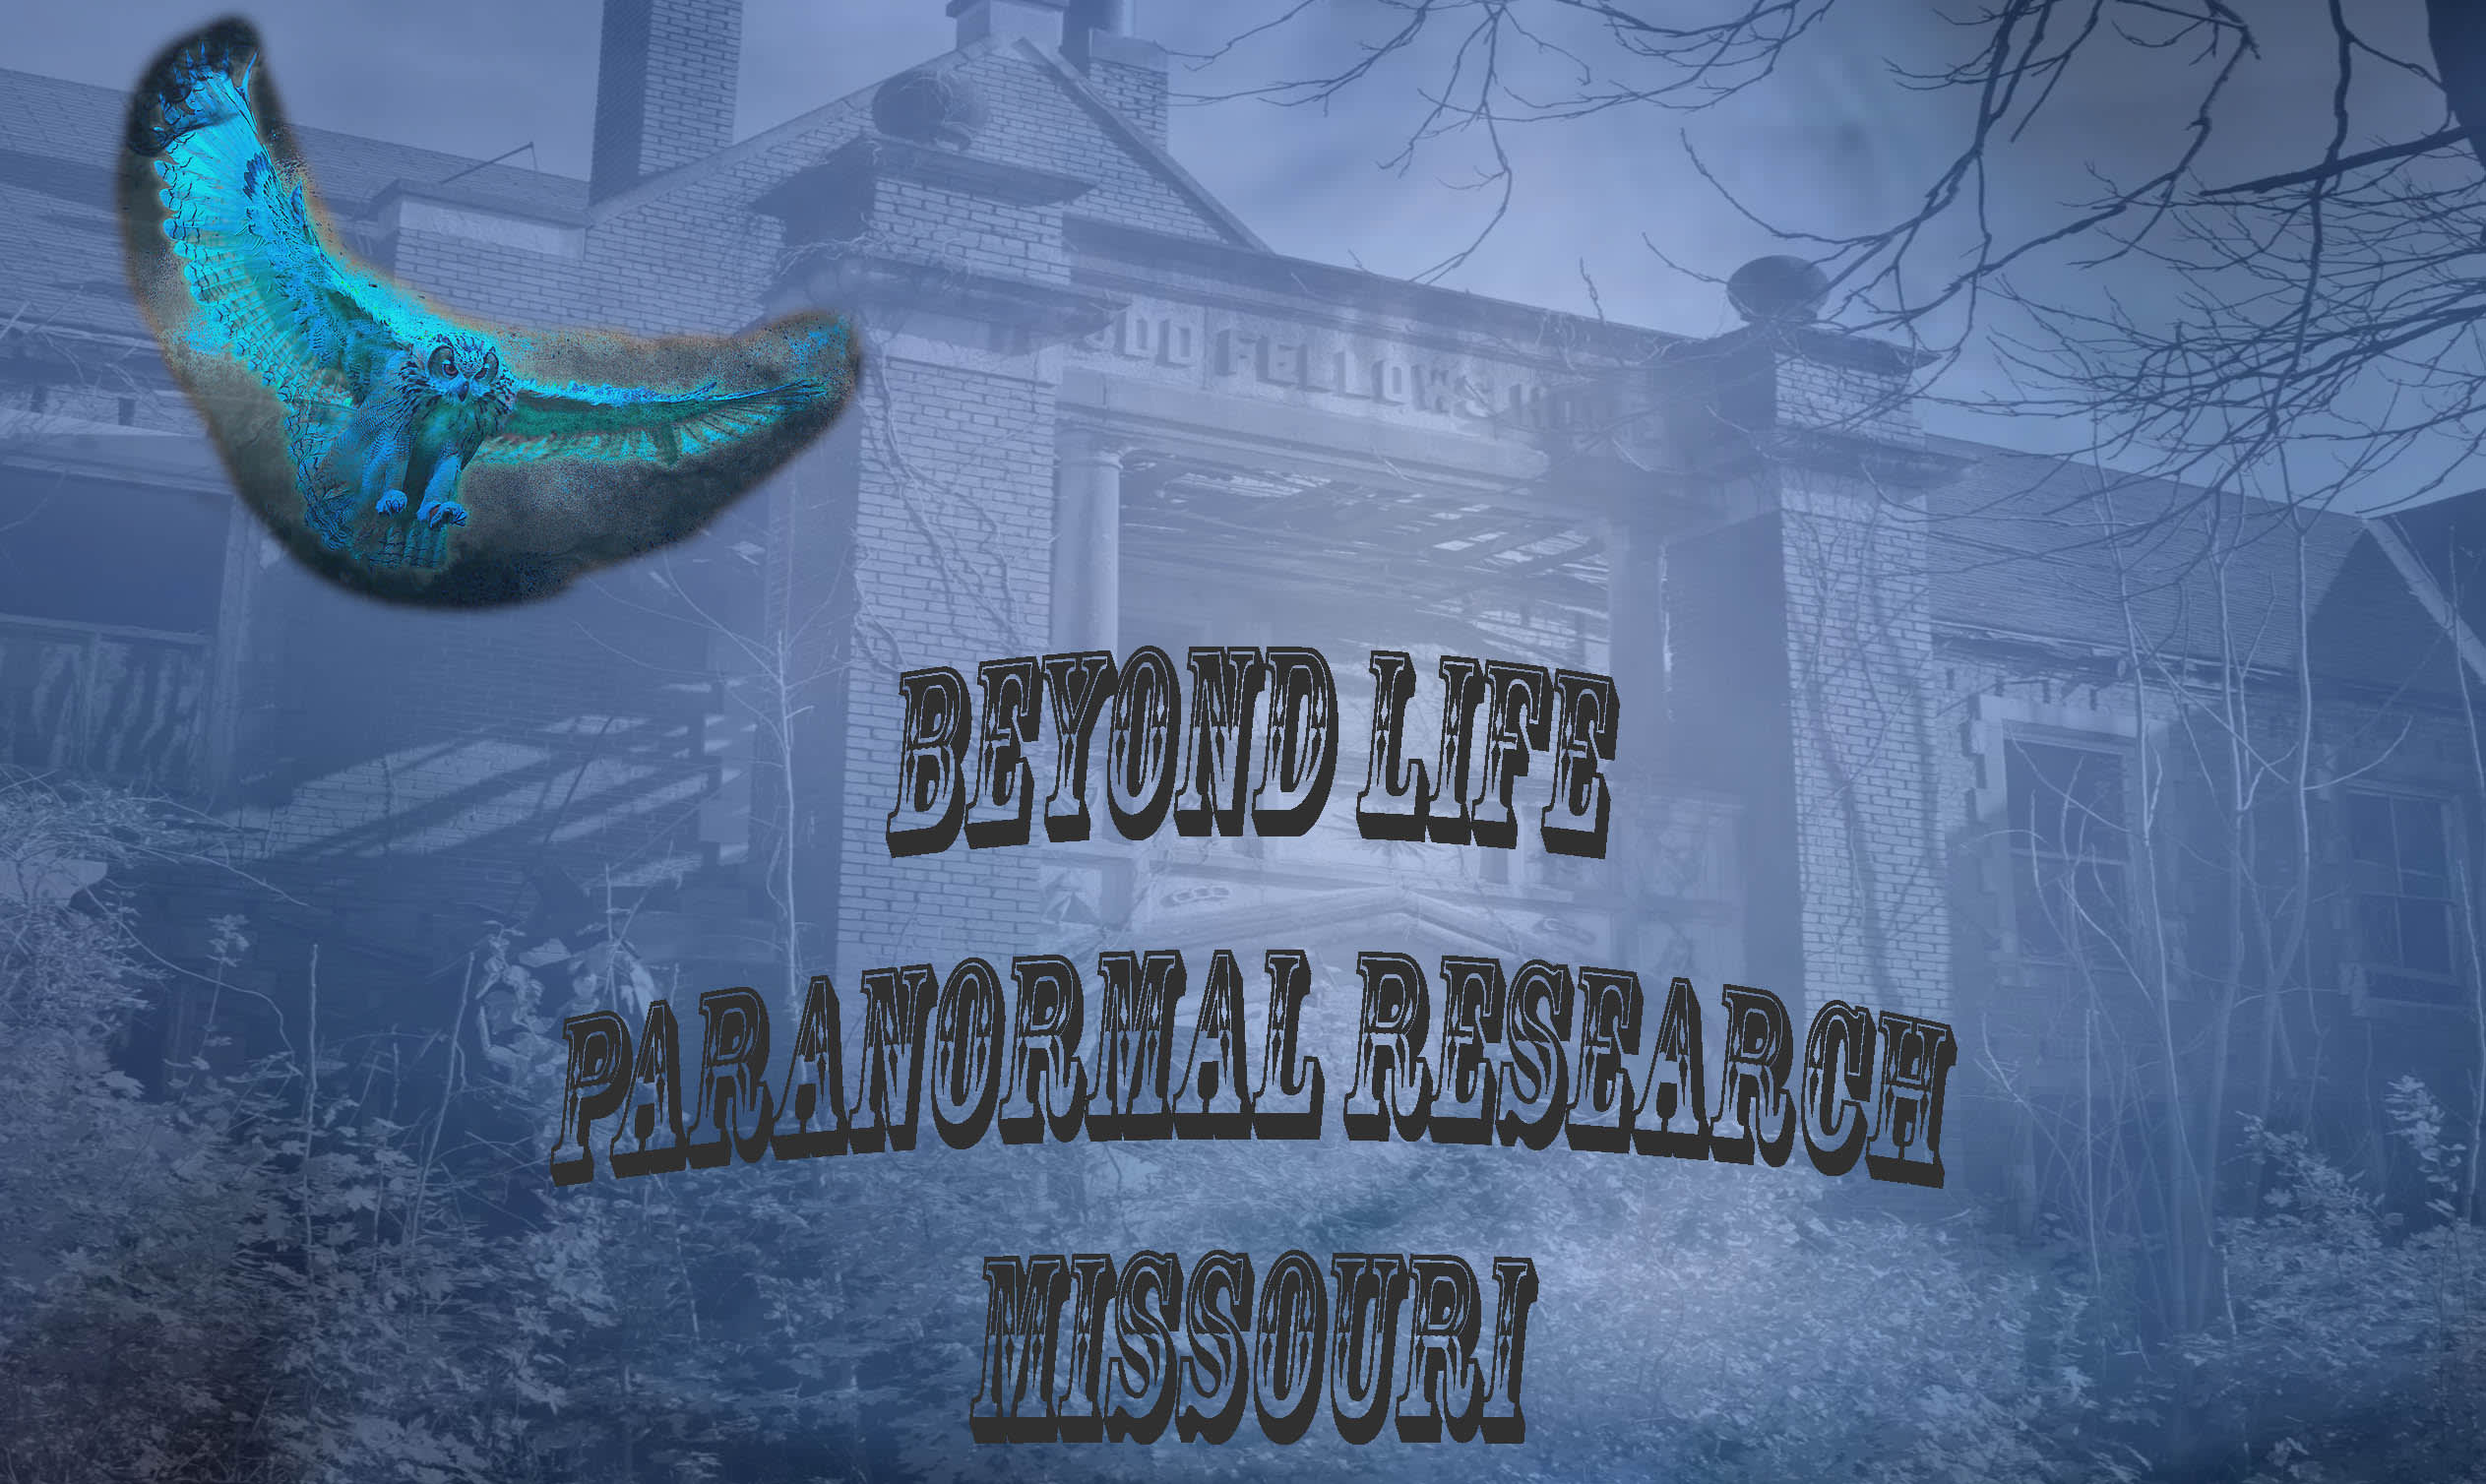 Beyond Life Paranormal Research Missouri